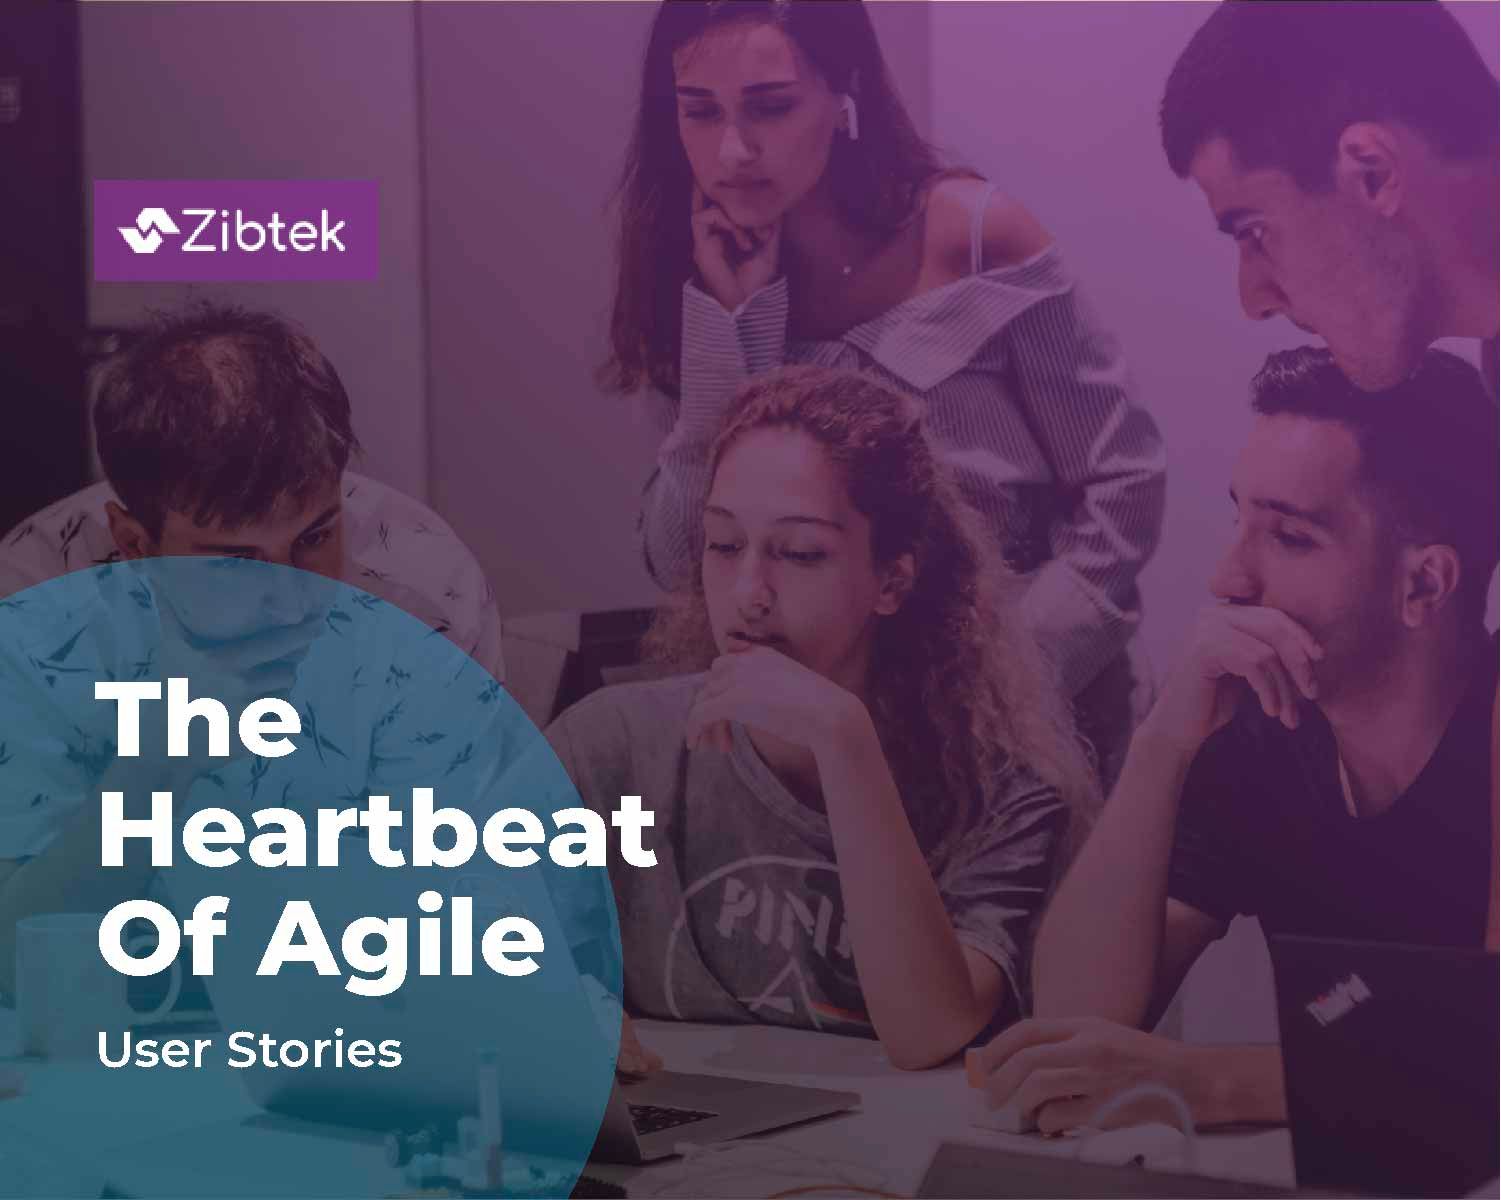 The Heartbeat of Agile: Agile Development User Stories